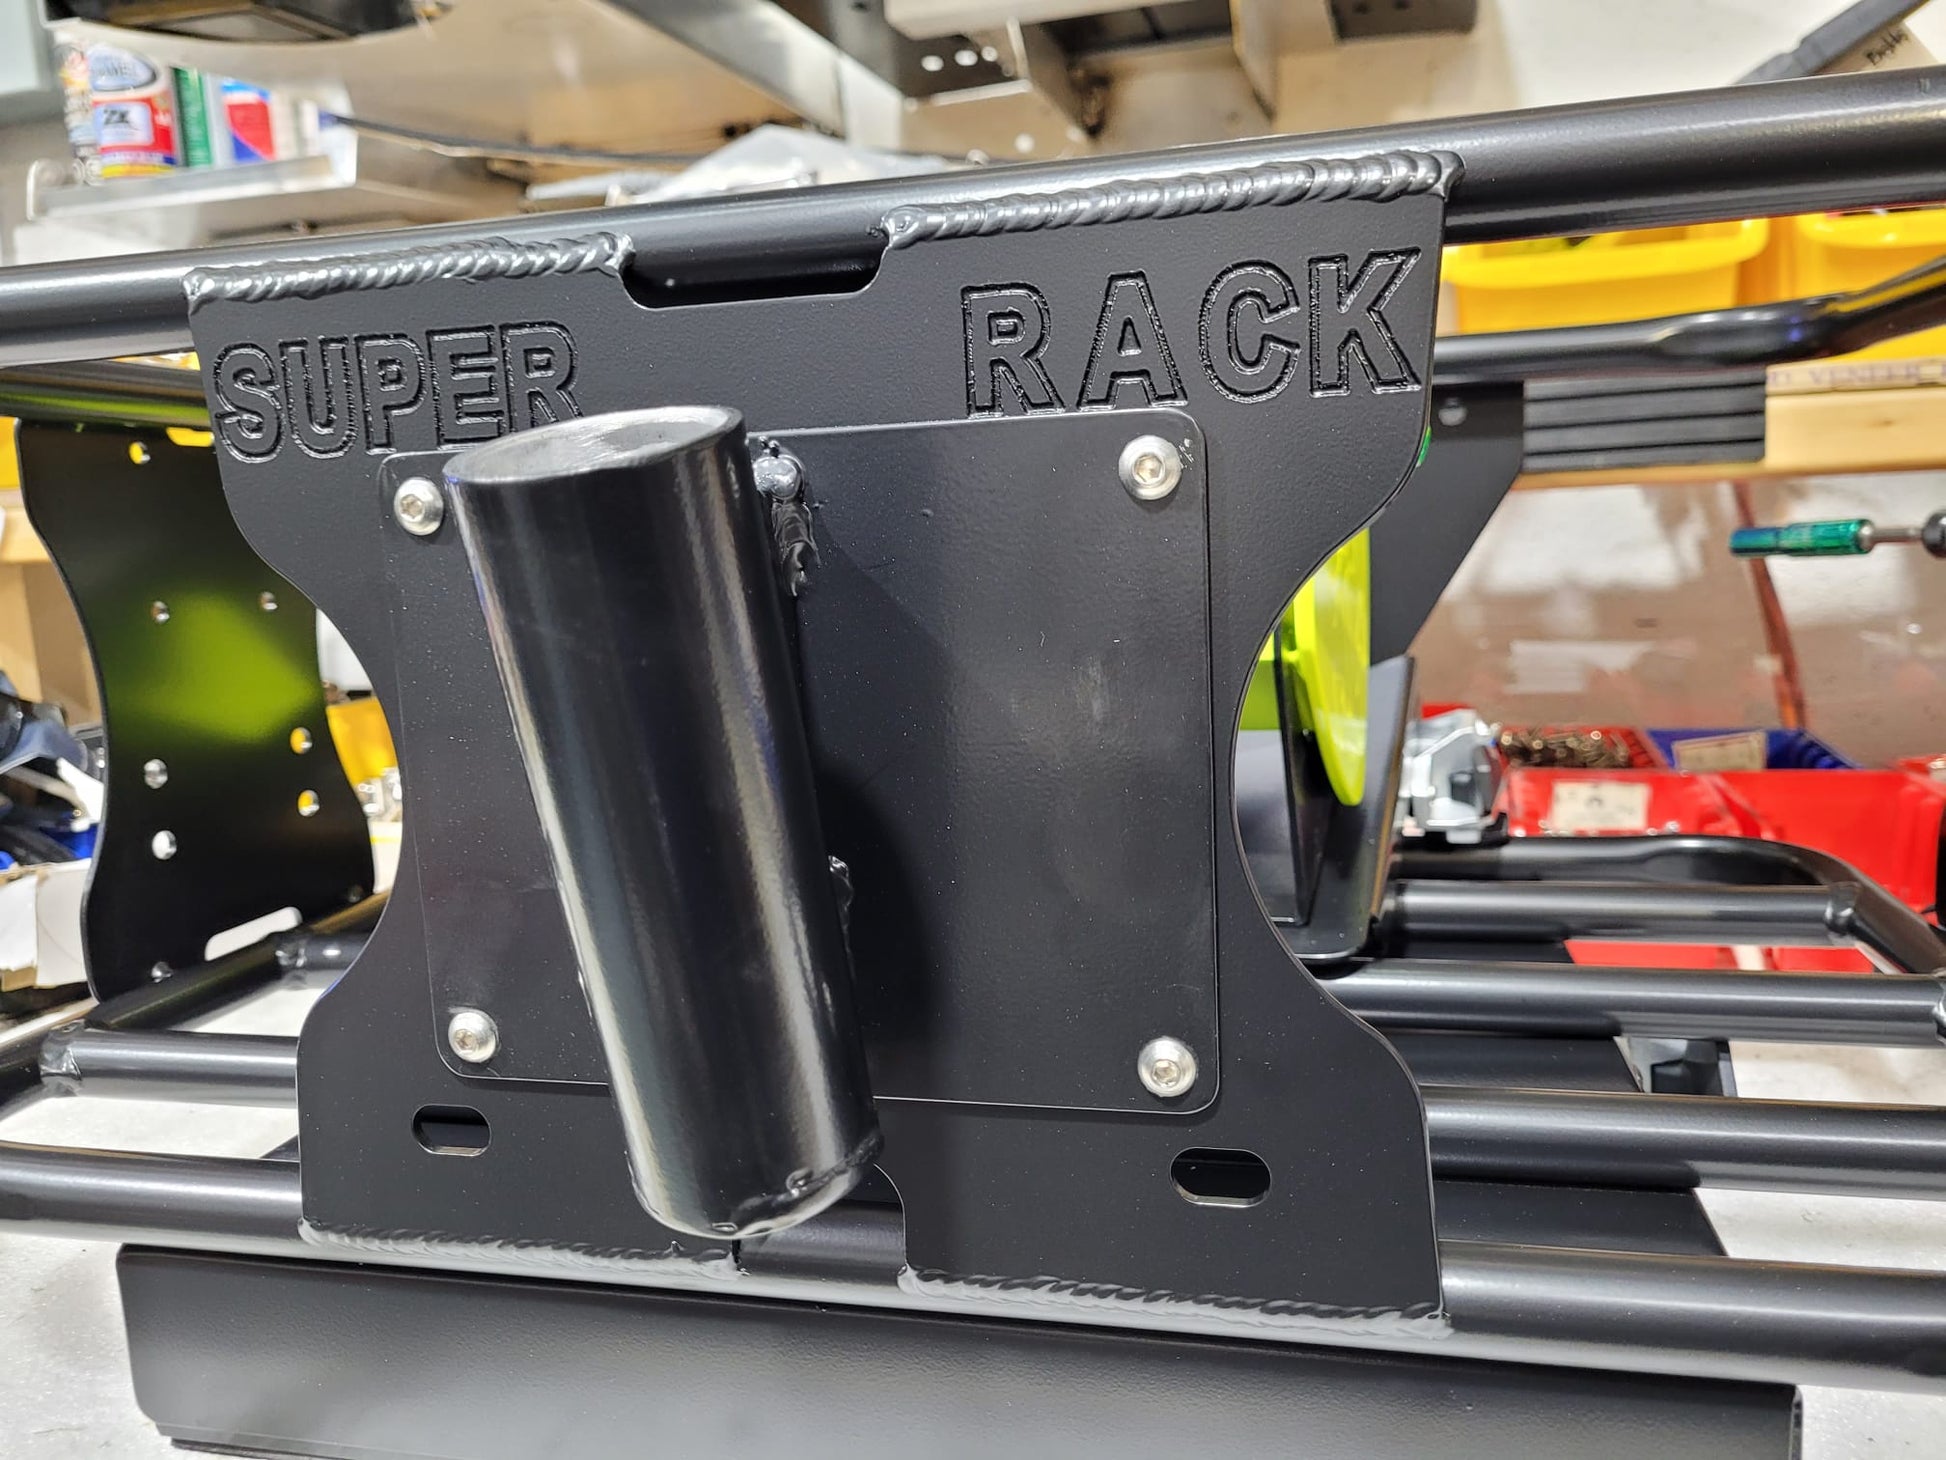 GoPro Mount Jet Ski  Watercraft Accessories – PWC Super Rack